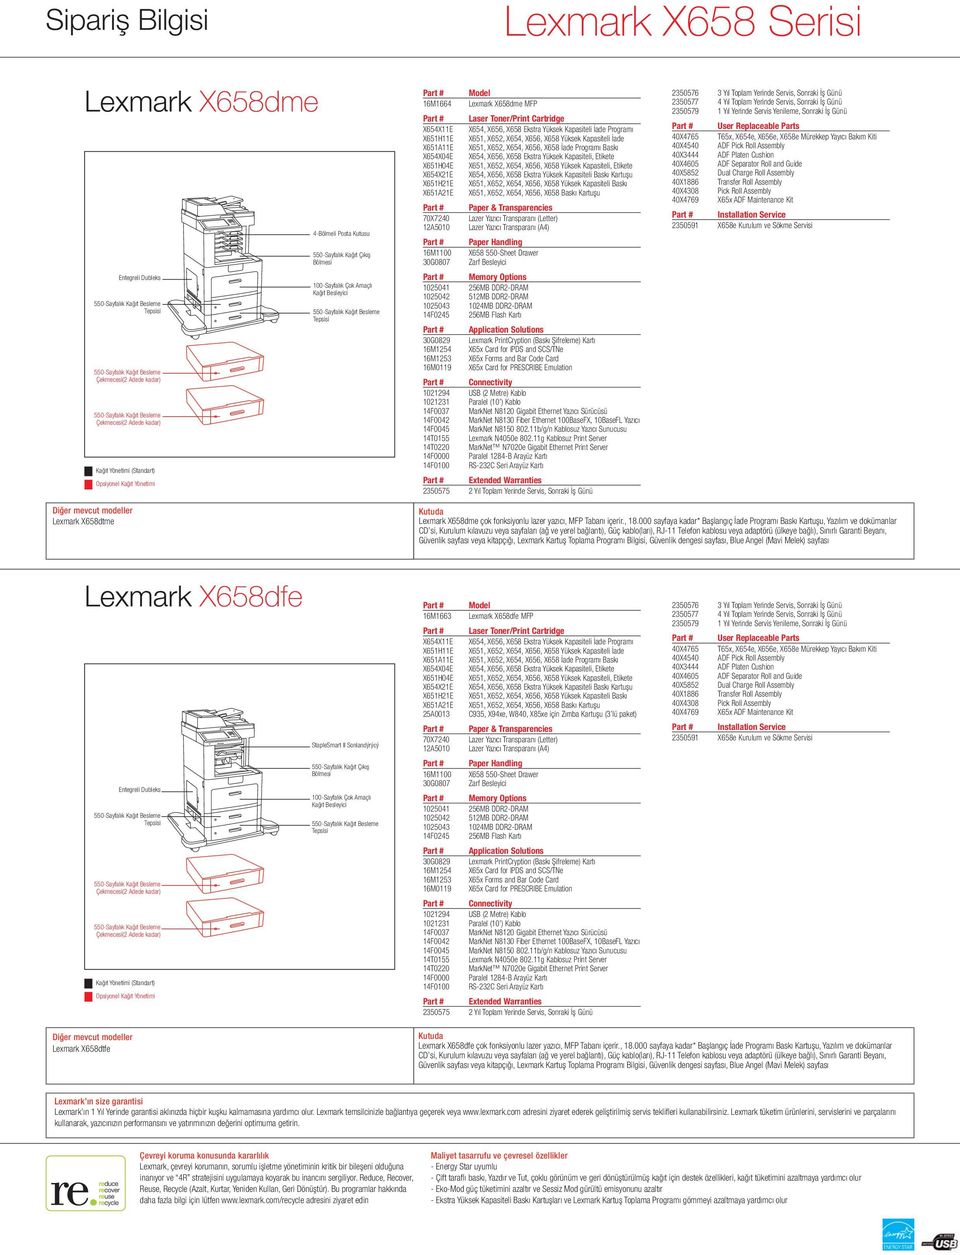 Model Lexmark X658dme MFP Laser Toner/Print Cartridge X654, X656, X658 Ekstra Yüksek Kapasiteli İade Programı X651, X652, X654, X656, X658 Yüksek Kapasiteli İade X651, X652, X654, X656, X658 İade